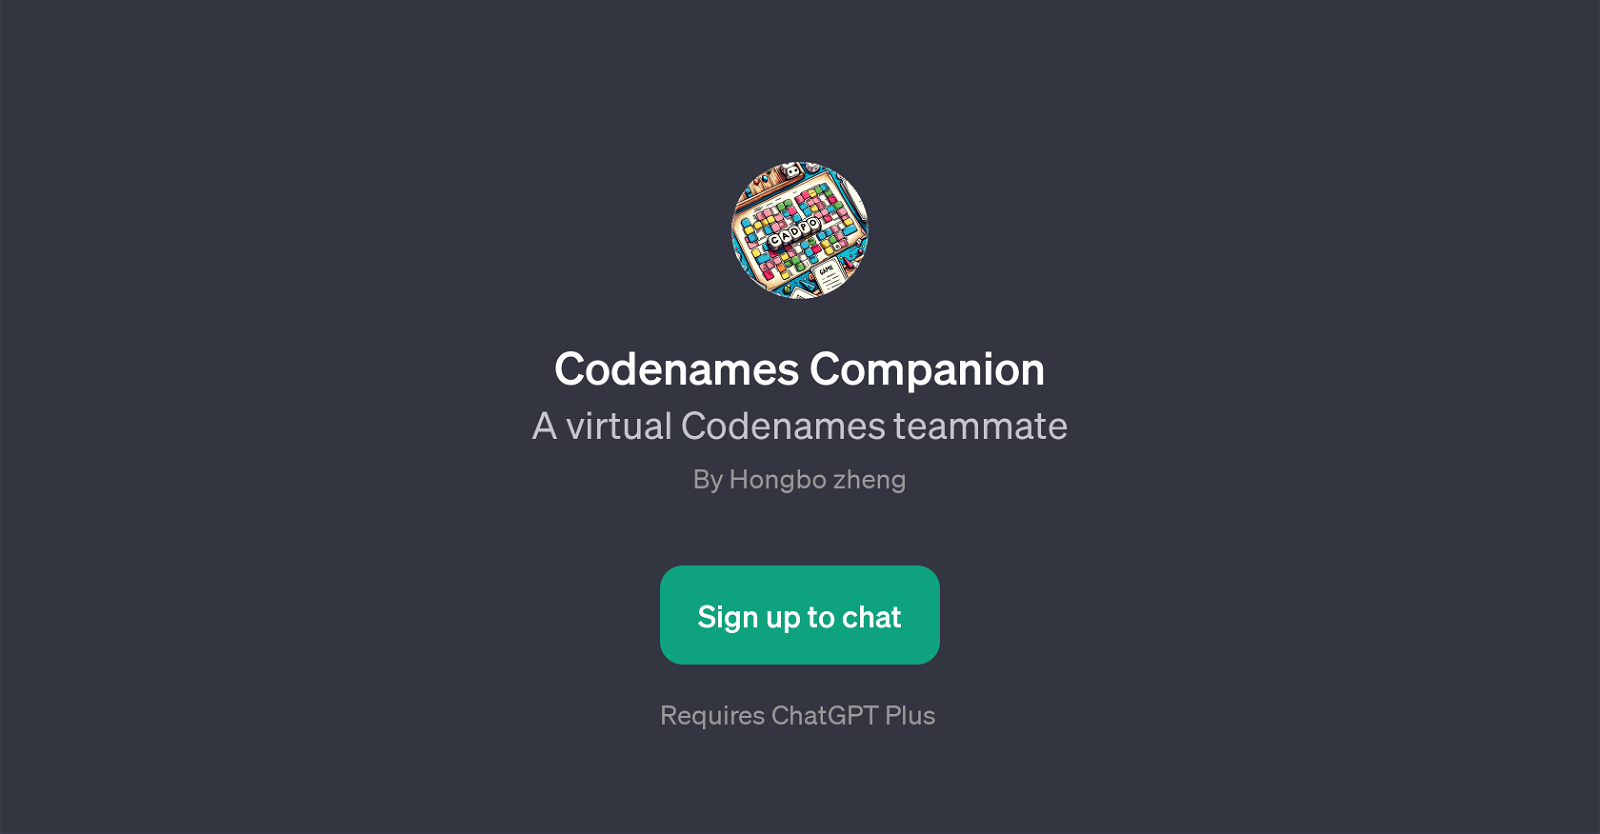 Codenames Companion website